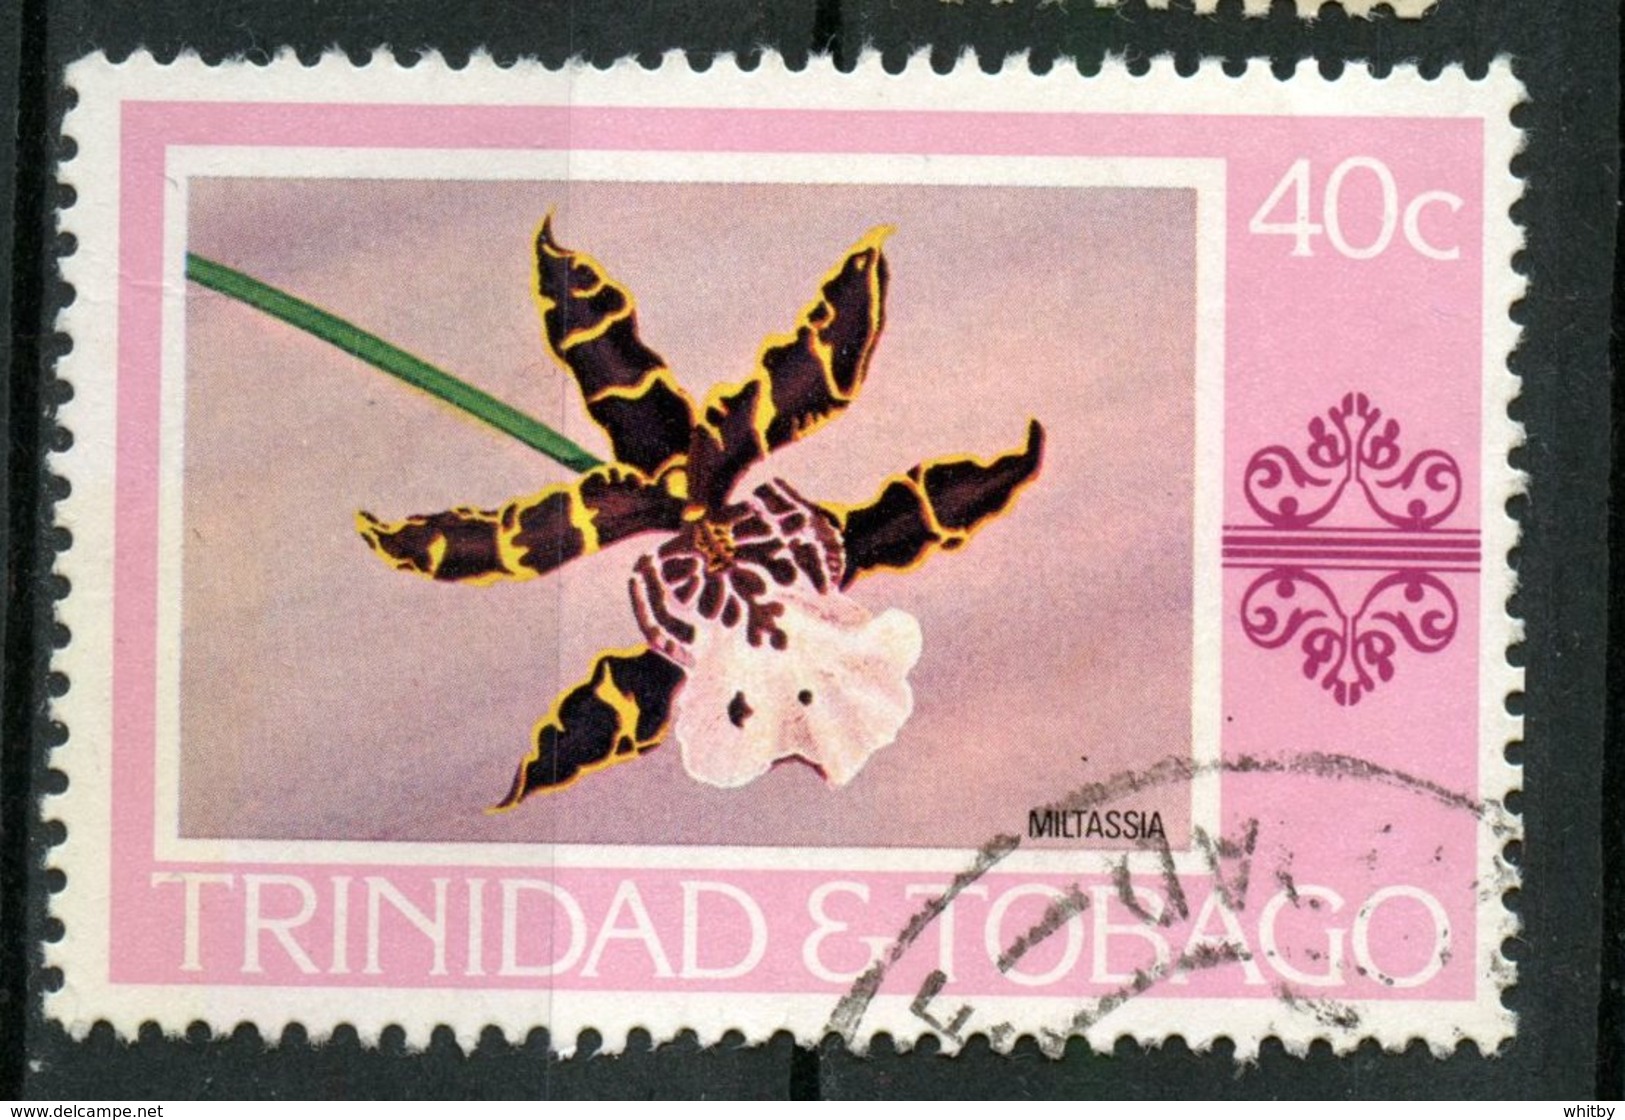 Trinidad And Tobago 1978 40c  Miltassia Issue #286  Stamp Is Used - Trinidad & Tobago (1962-...)